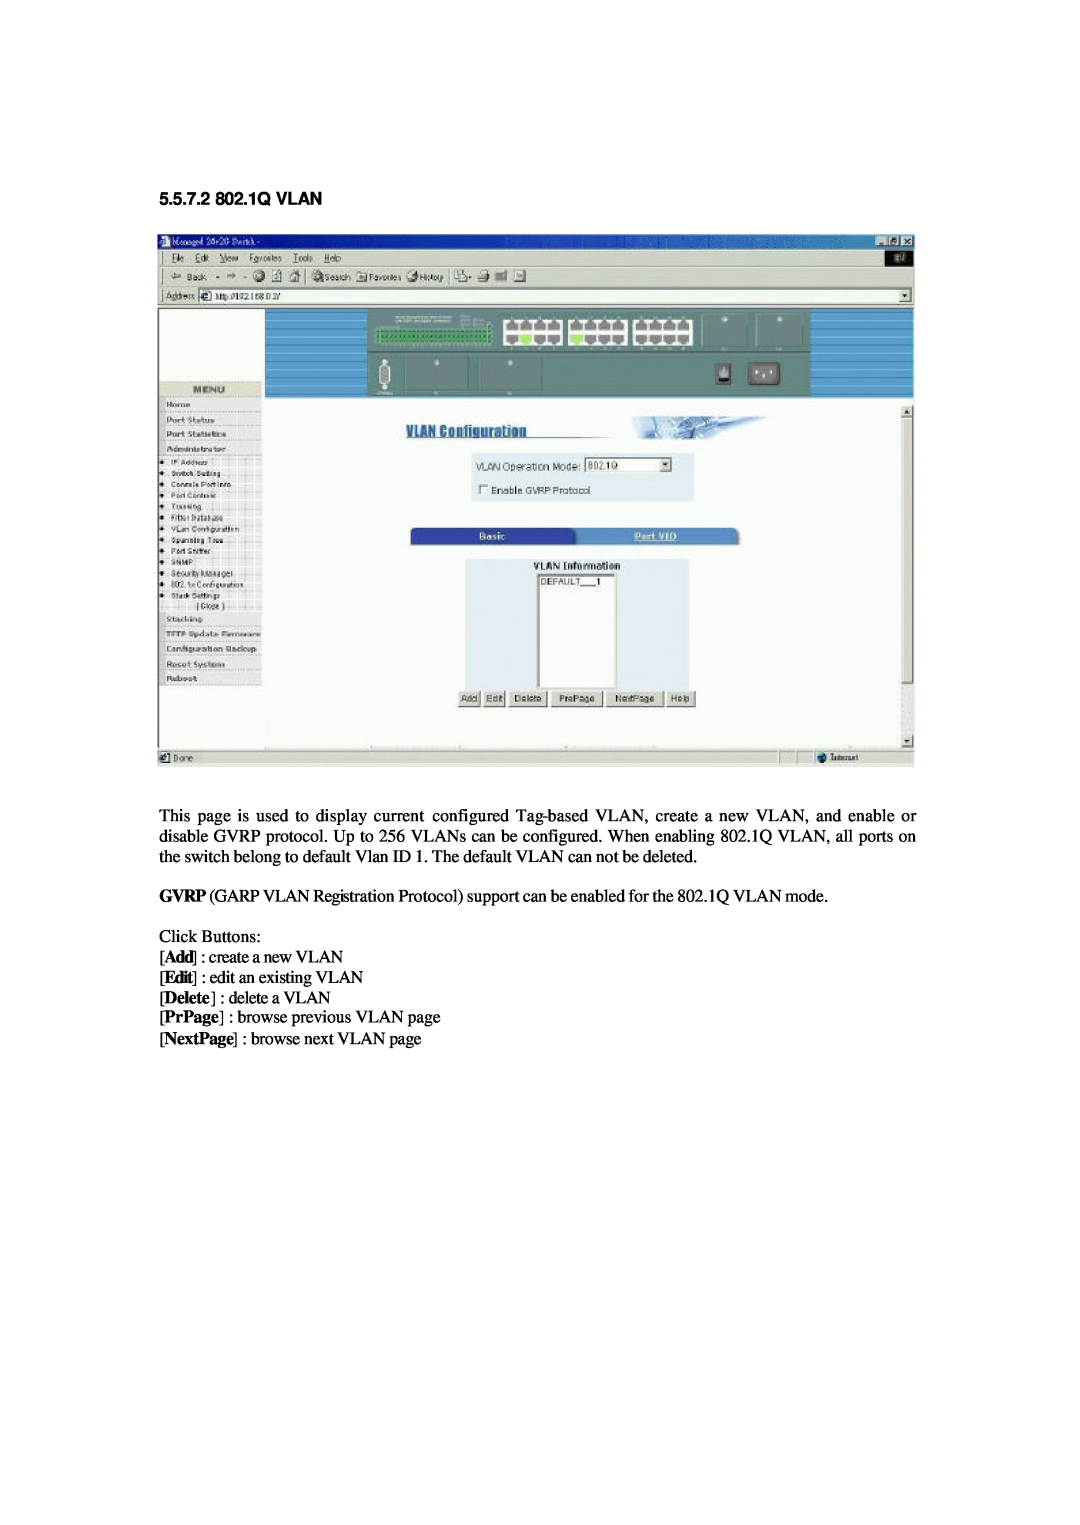 Xerox NS-2260 operation manual 5.5.7.2 802.1Q VLAN 